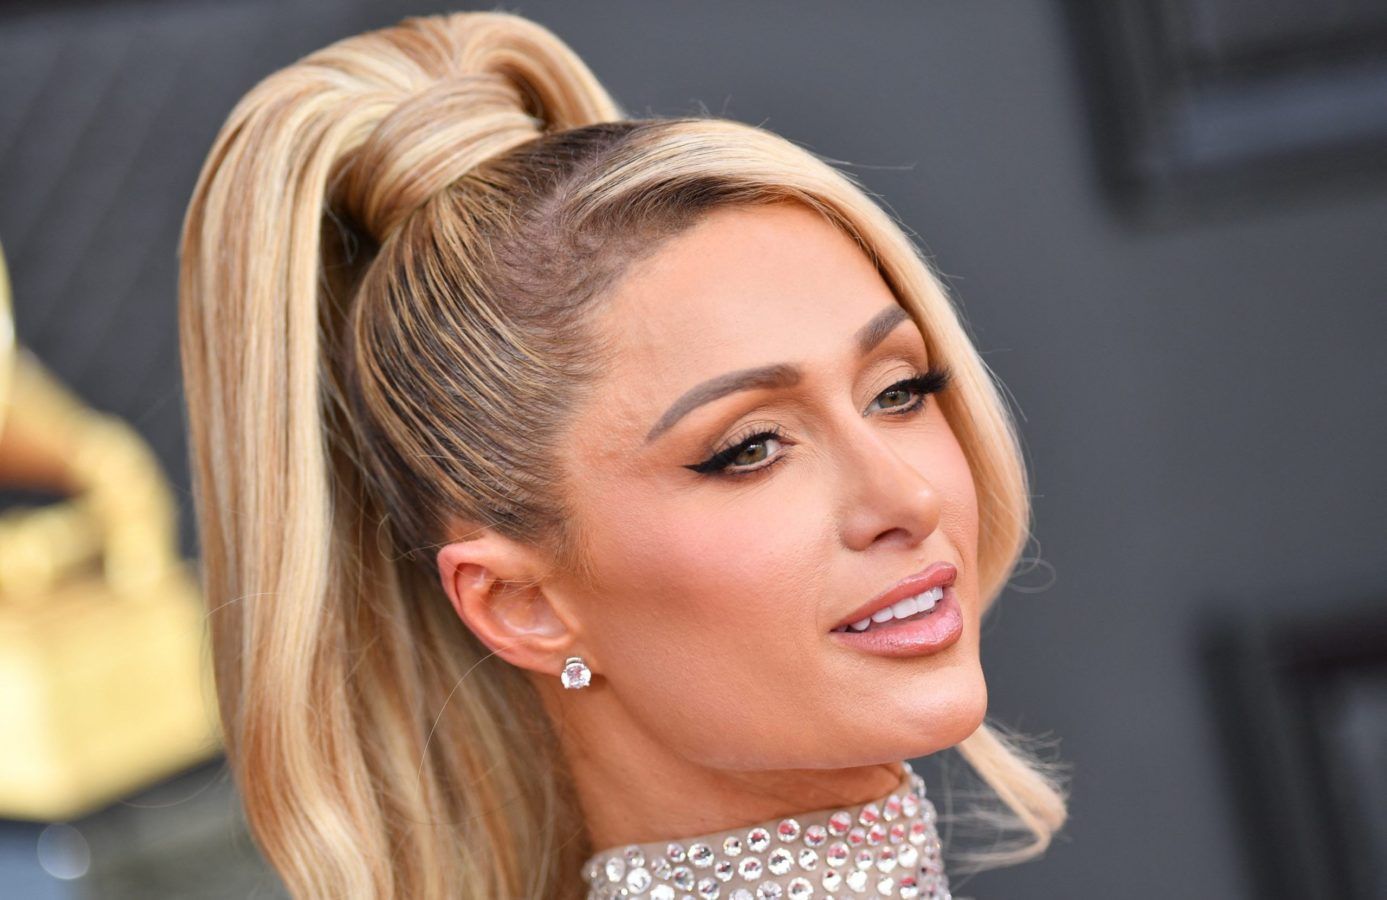 Paris Hilton’s martini glass handbag from the Grammys enters the metaverse